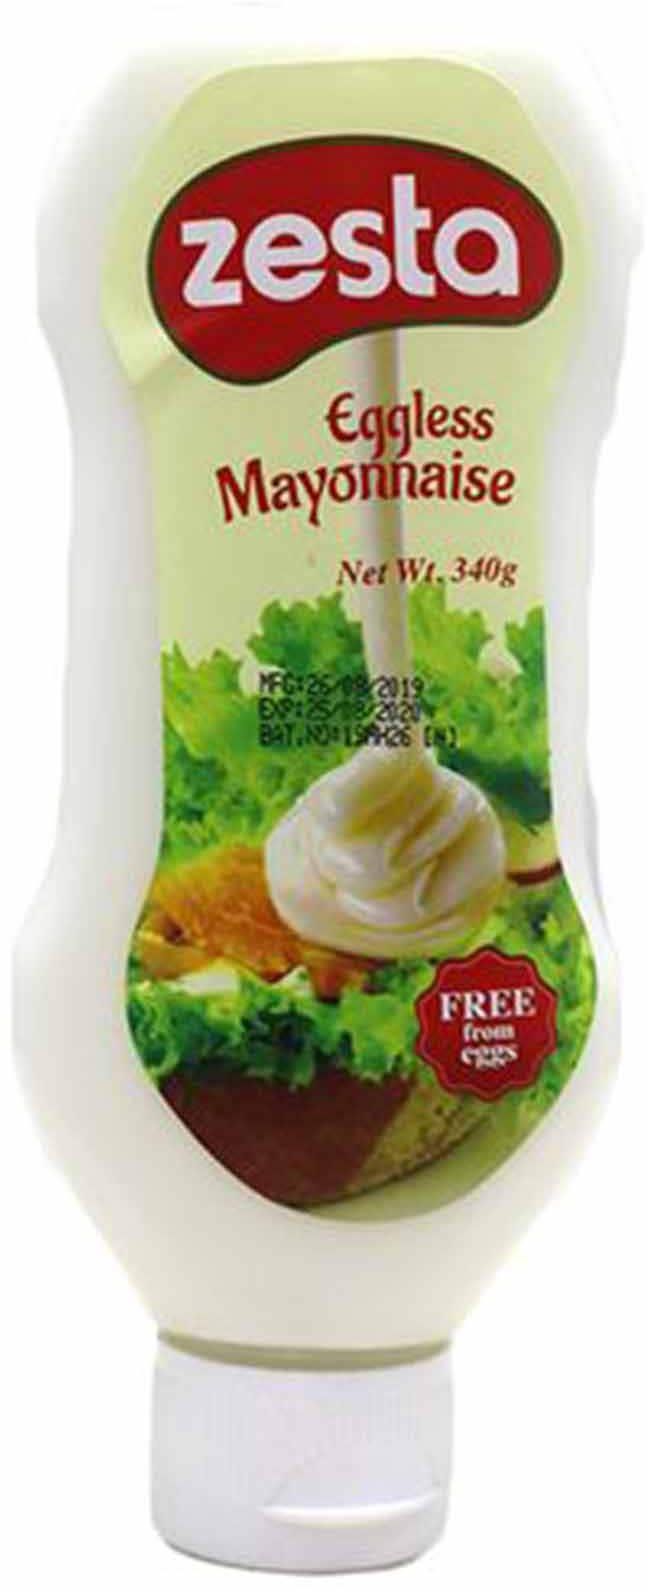 Zesta Eggless Mayonnaise 340g